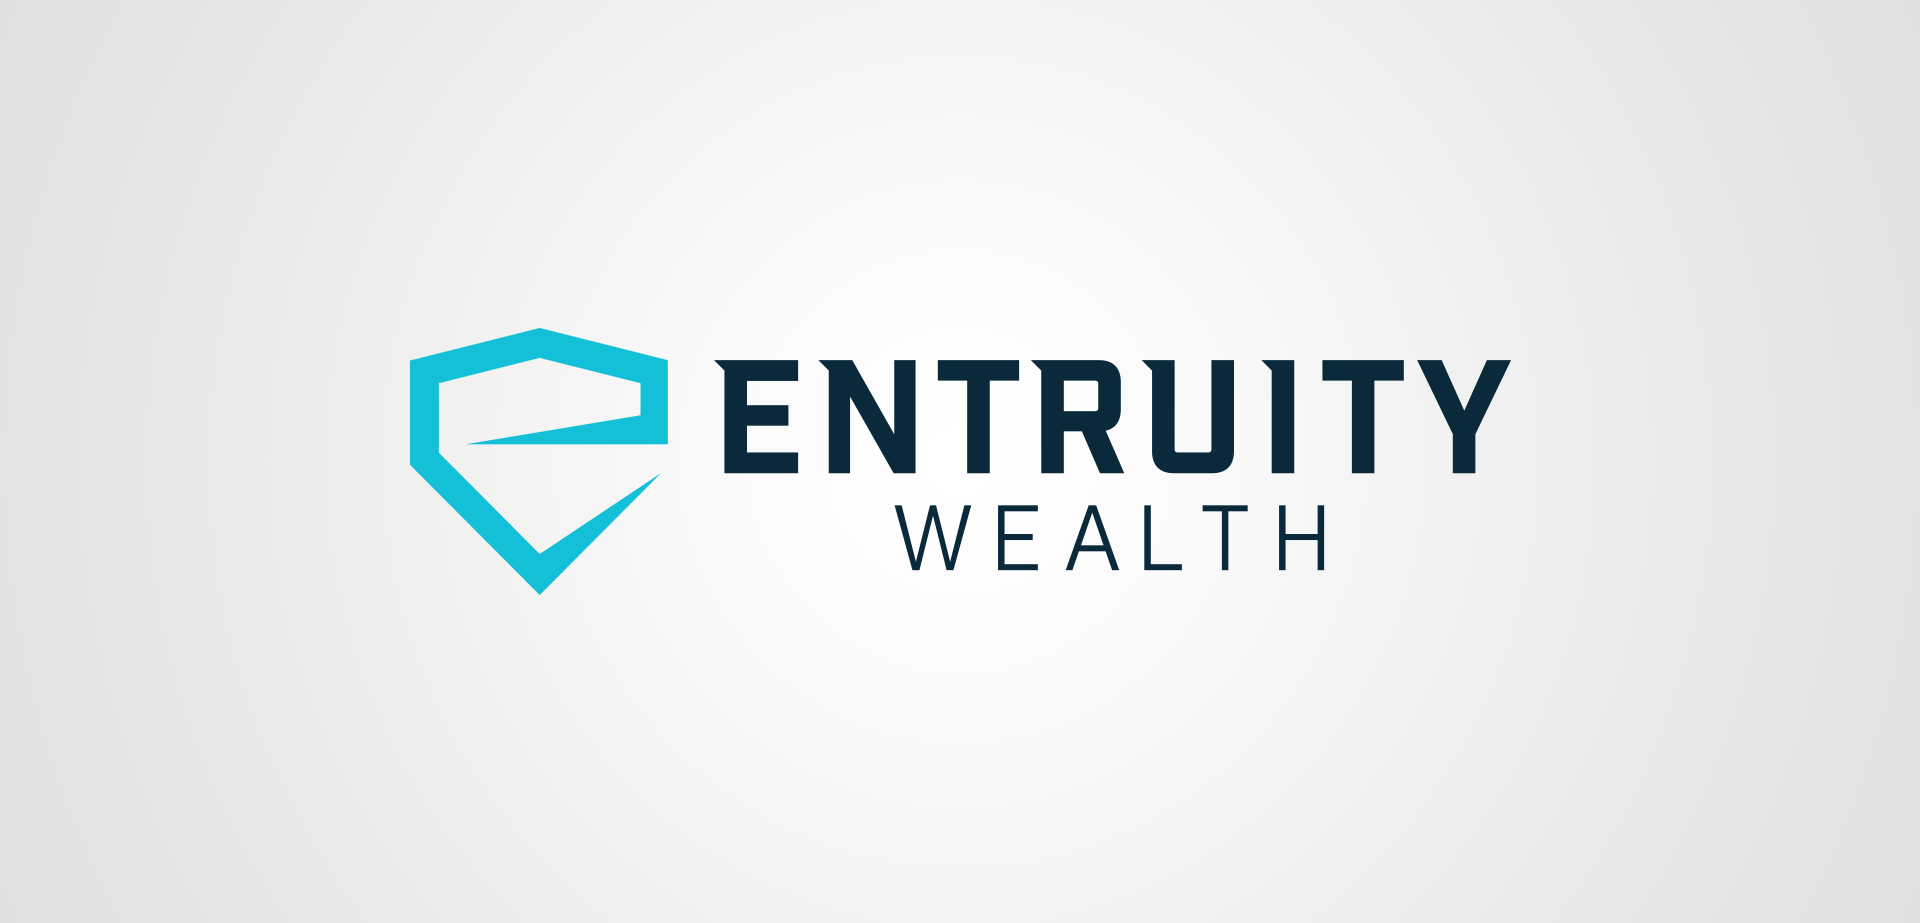 entruity wealth logo design